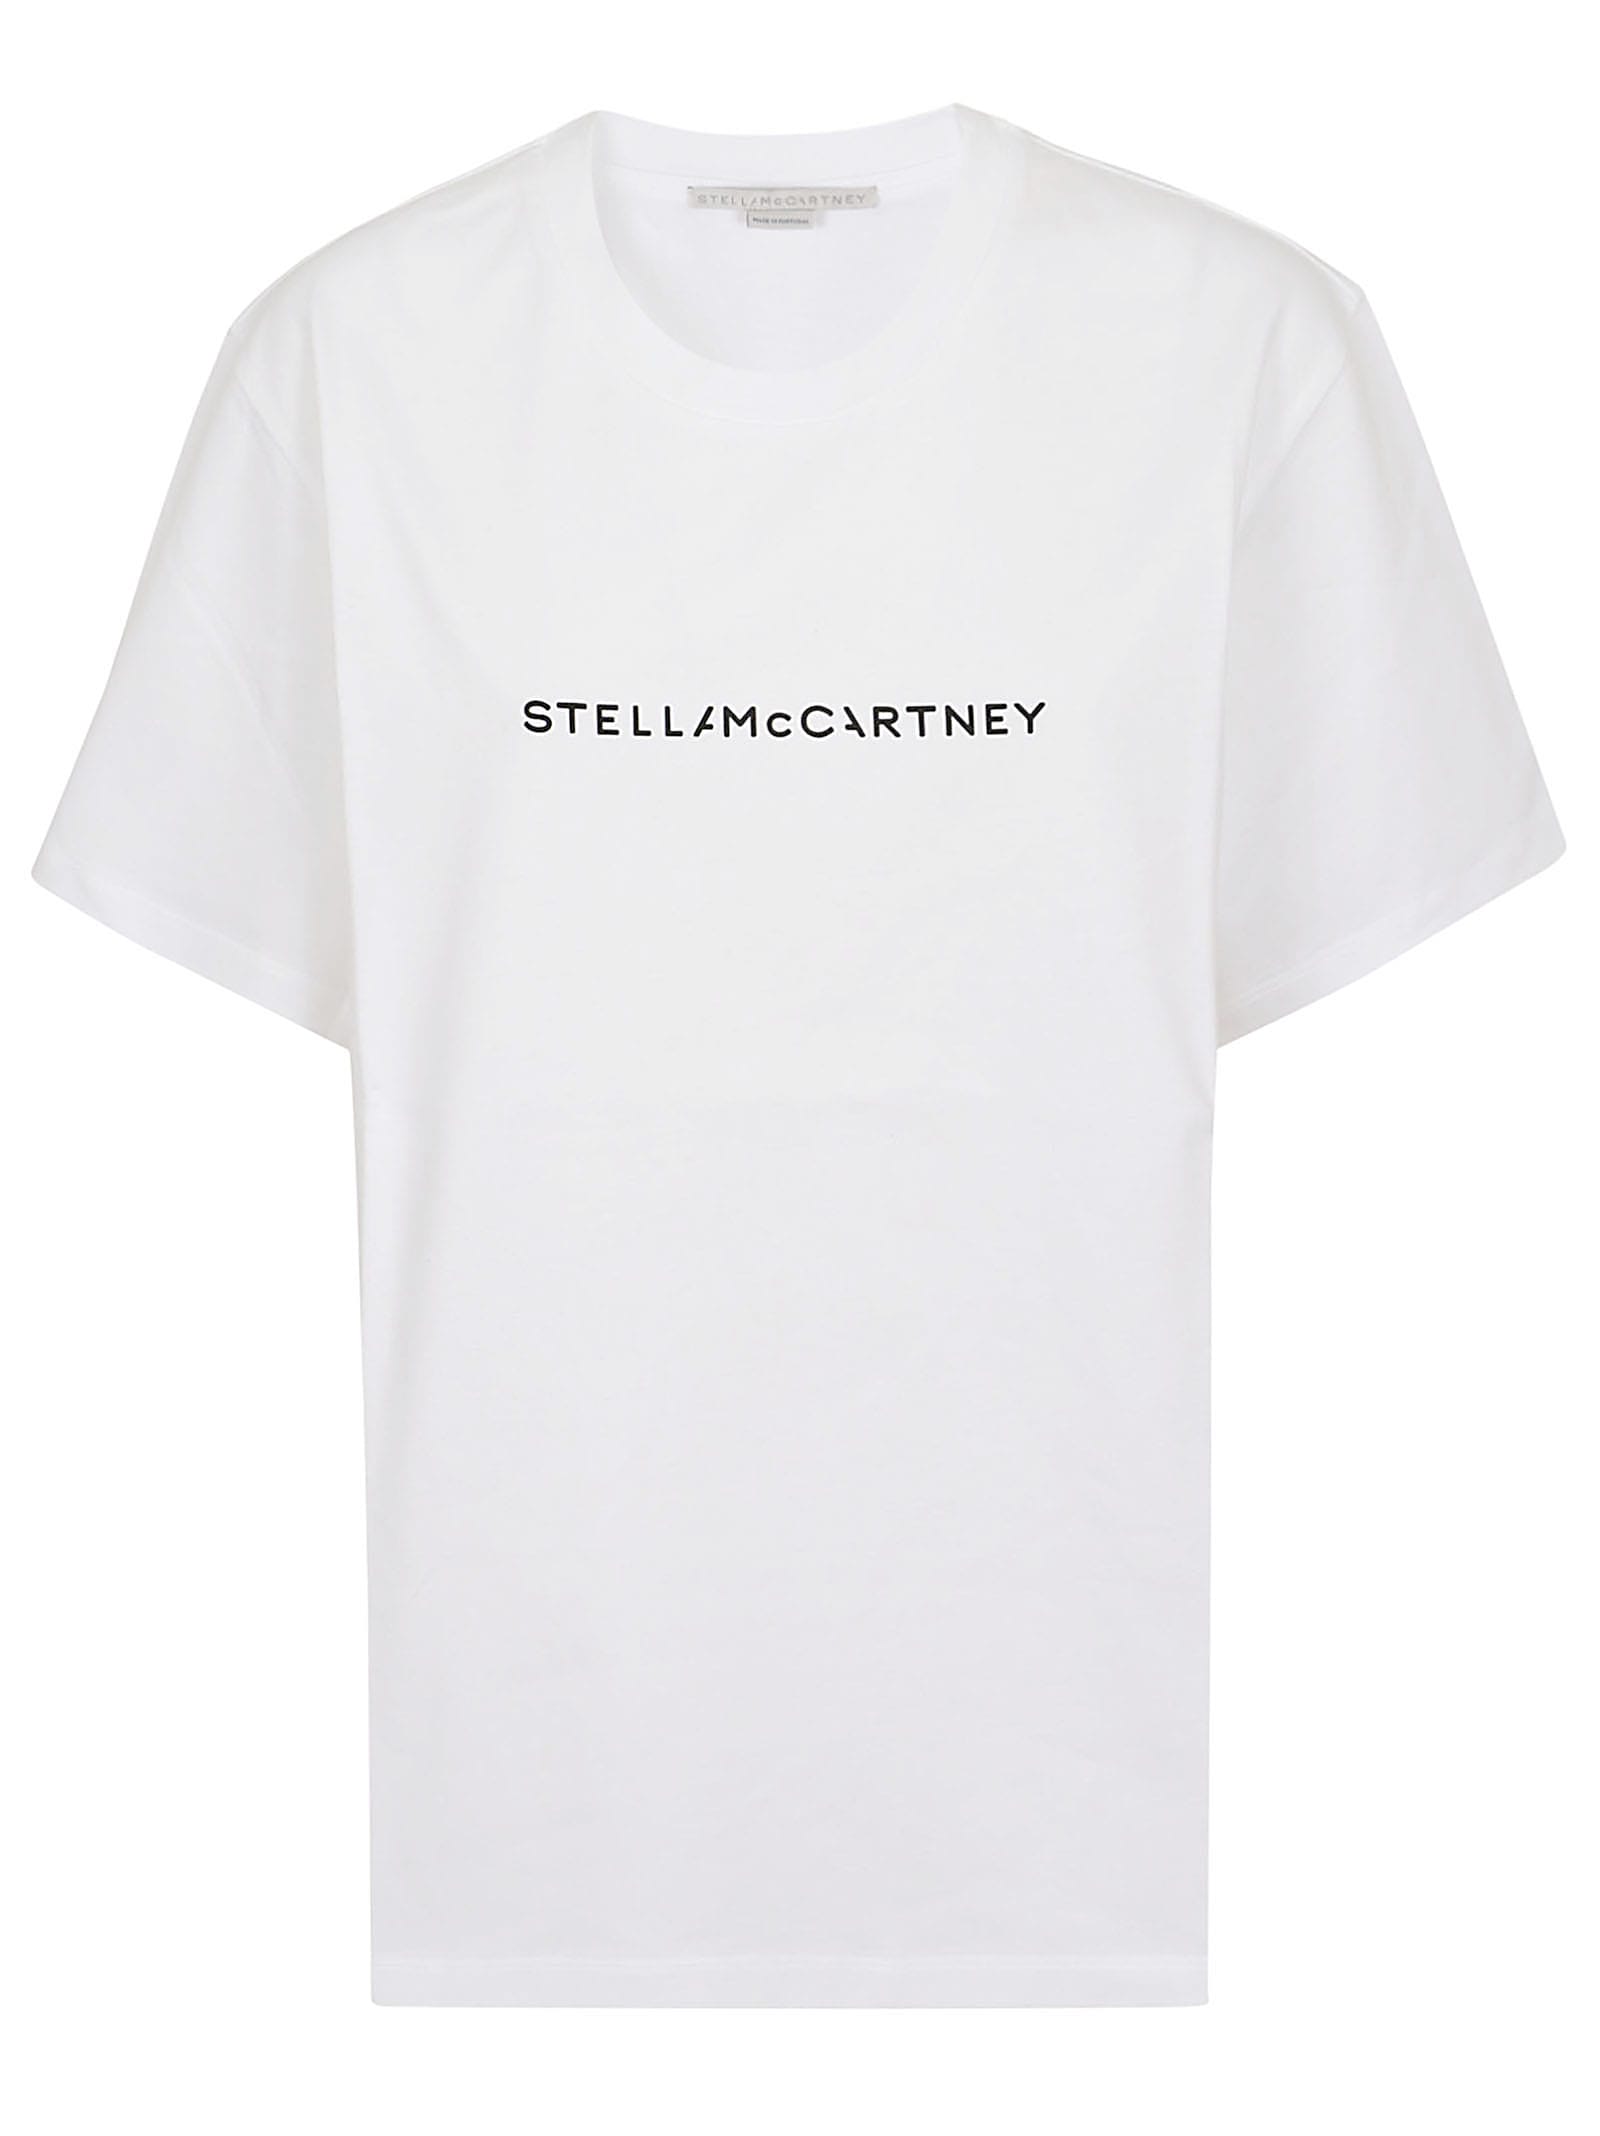 Stella Mccartney Iconic Print In Pure White